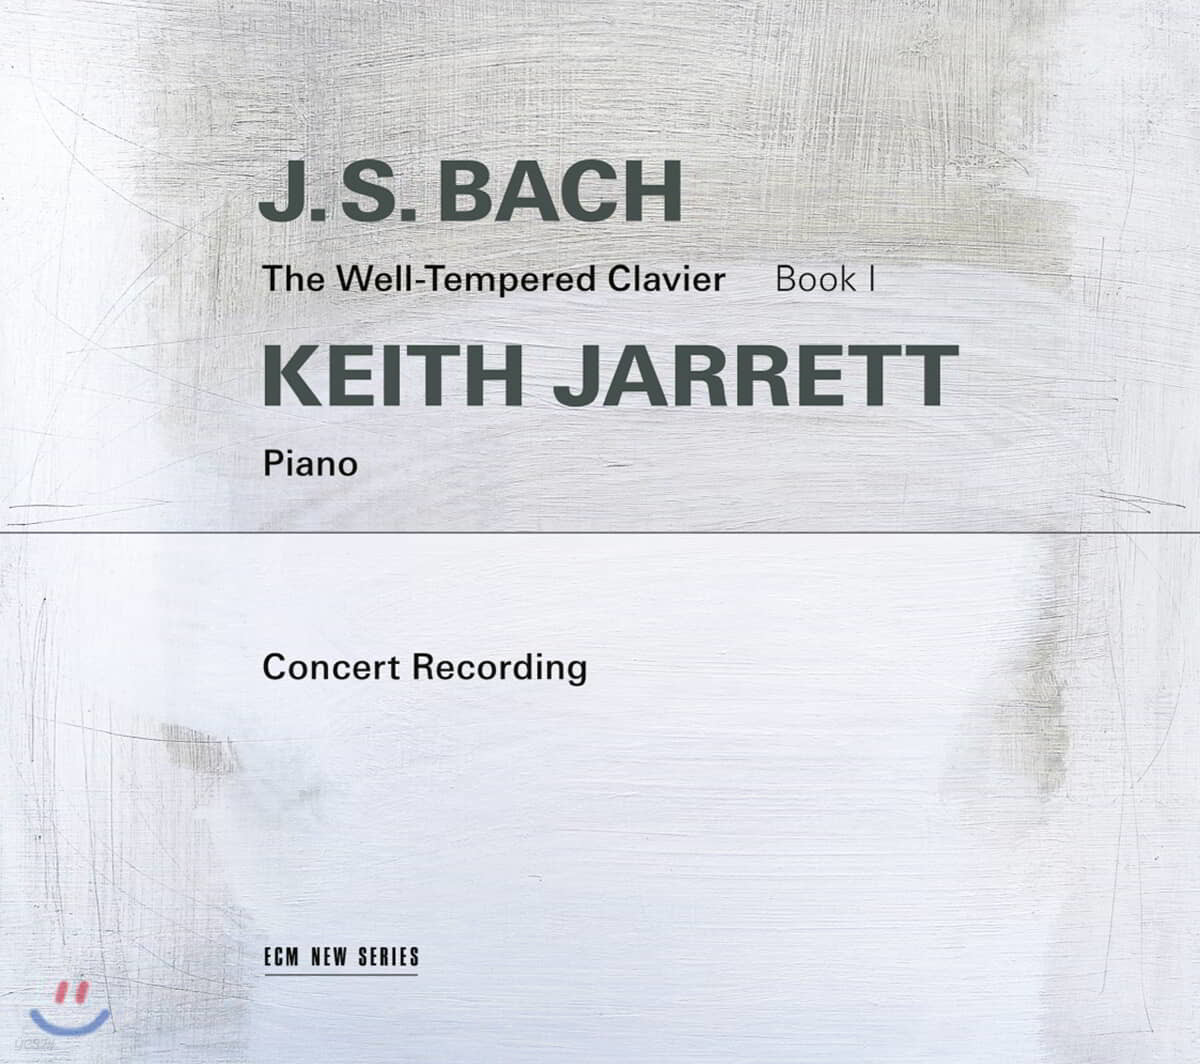 Keith Jarrett 바흐: 평균율 클라비어 곡집 1권 (J.S.Bach: The Well-Tempered Clavier, Book I BWV 846-869 )